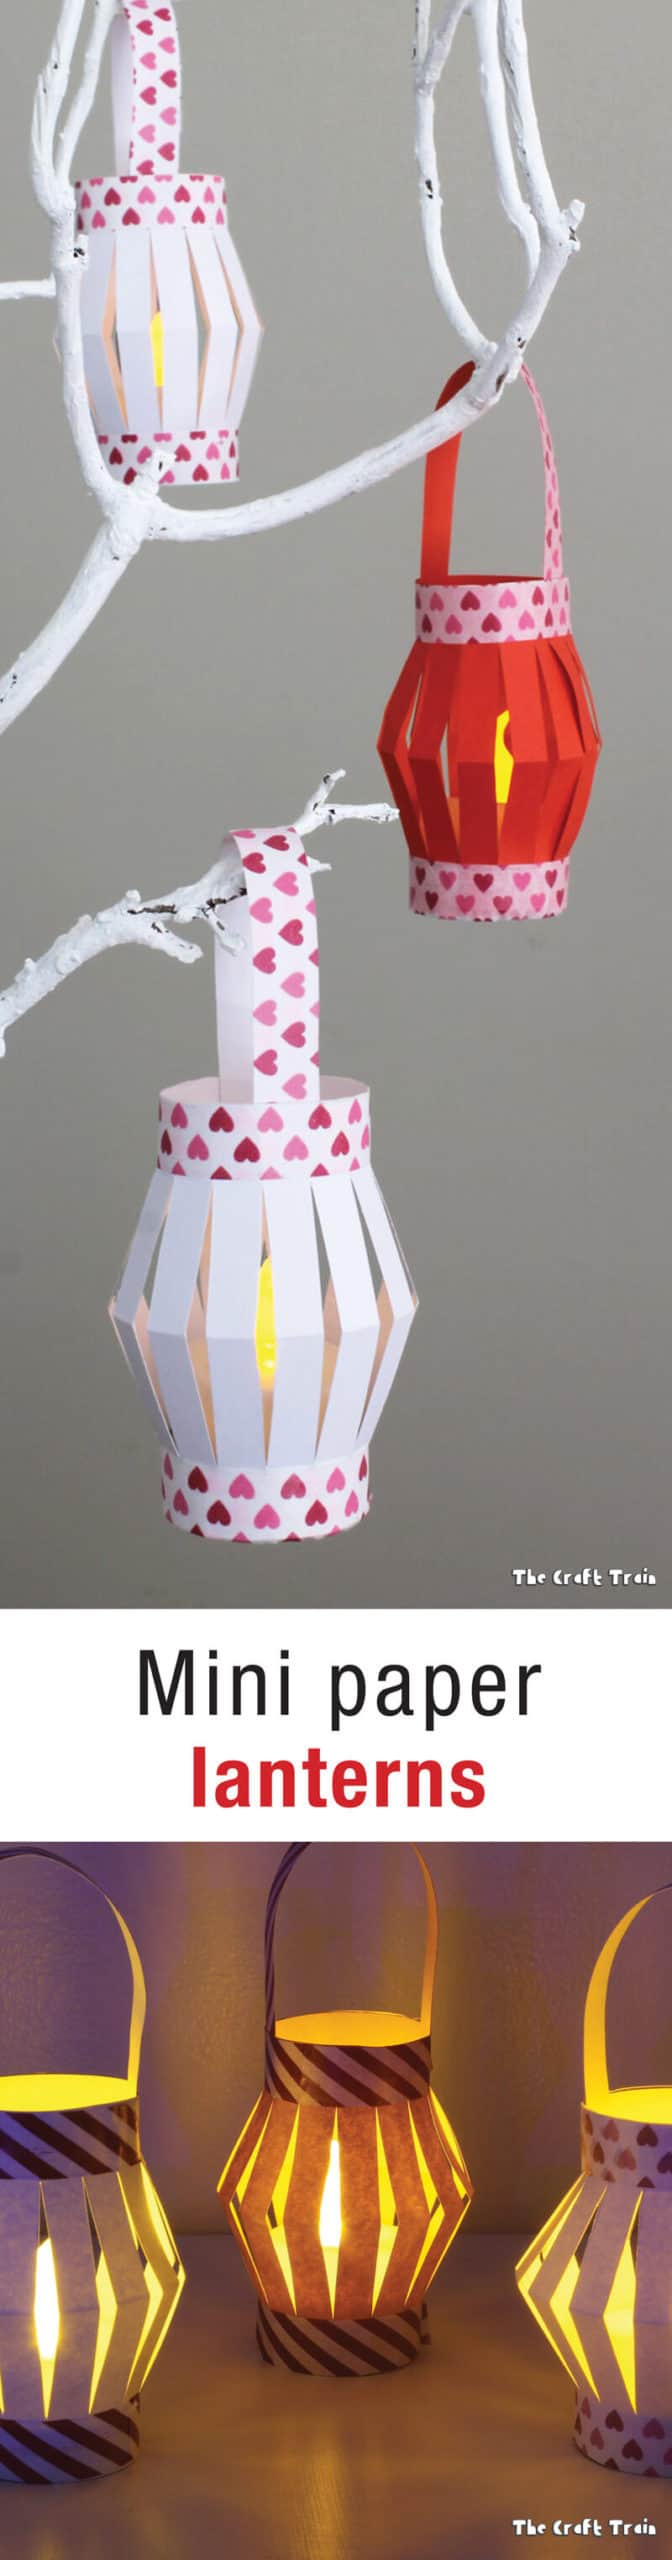 Mini paper lanterns